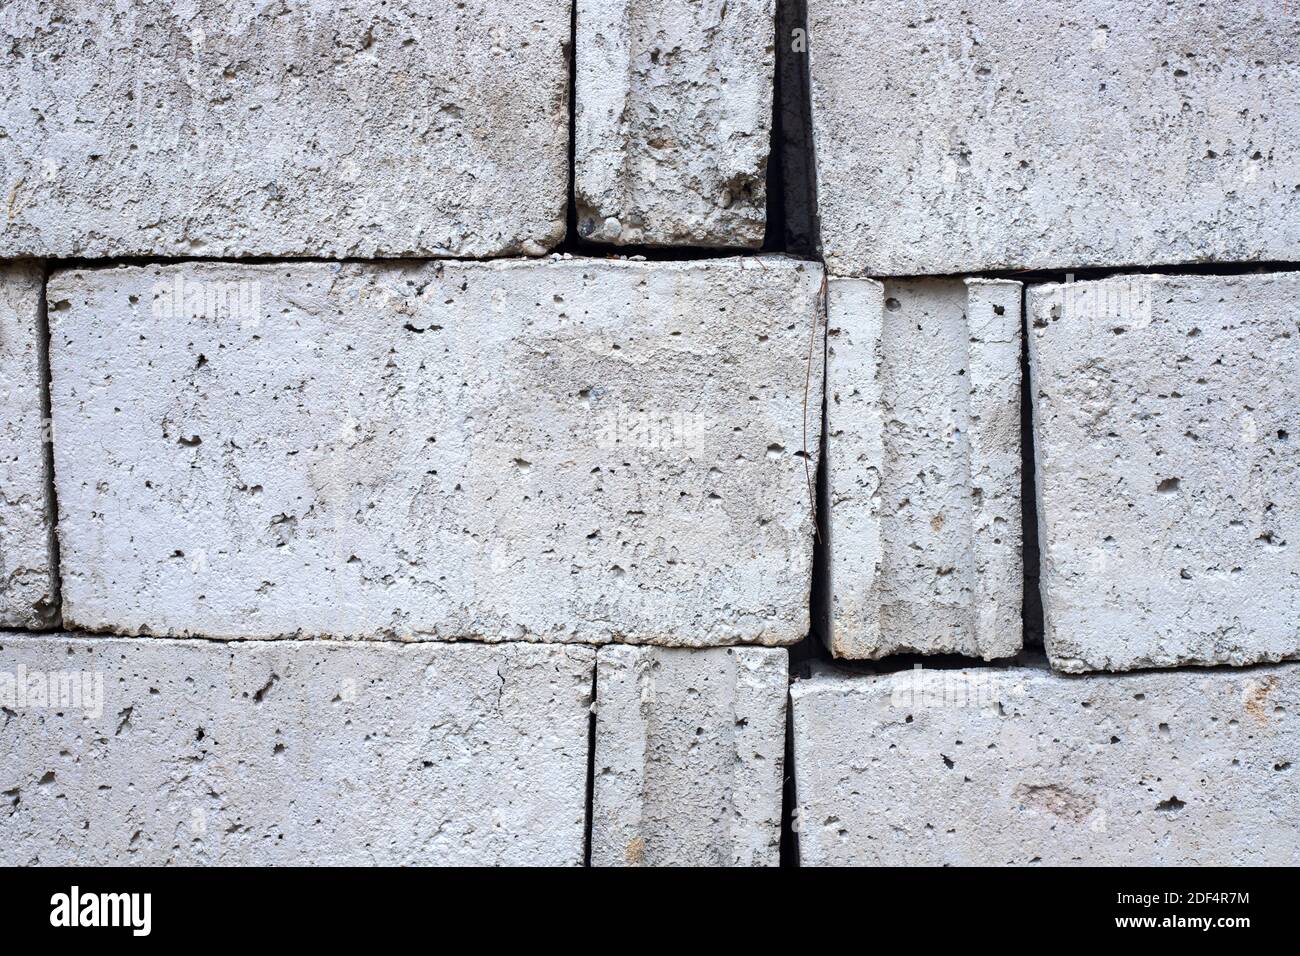 White concrete bricks closeup photo texture. Concrete block surface. Rough grey stone brick. Masonry wall made of big block. Rustic stone texture. Ind Stock Photo